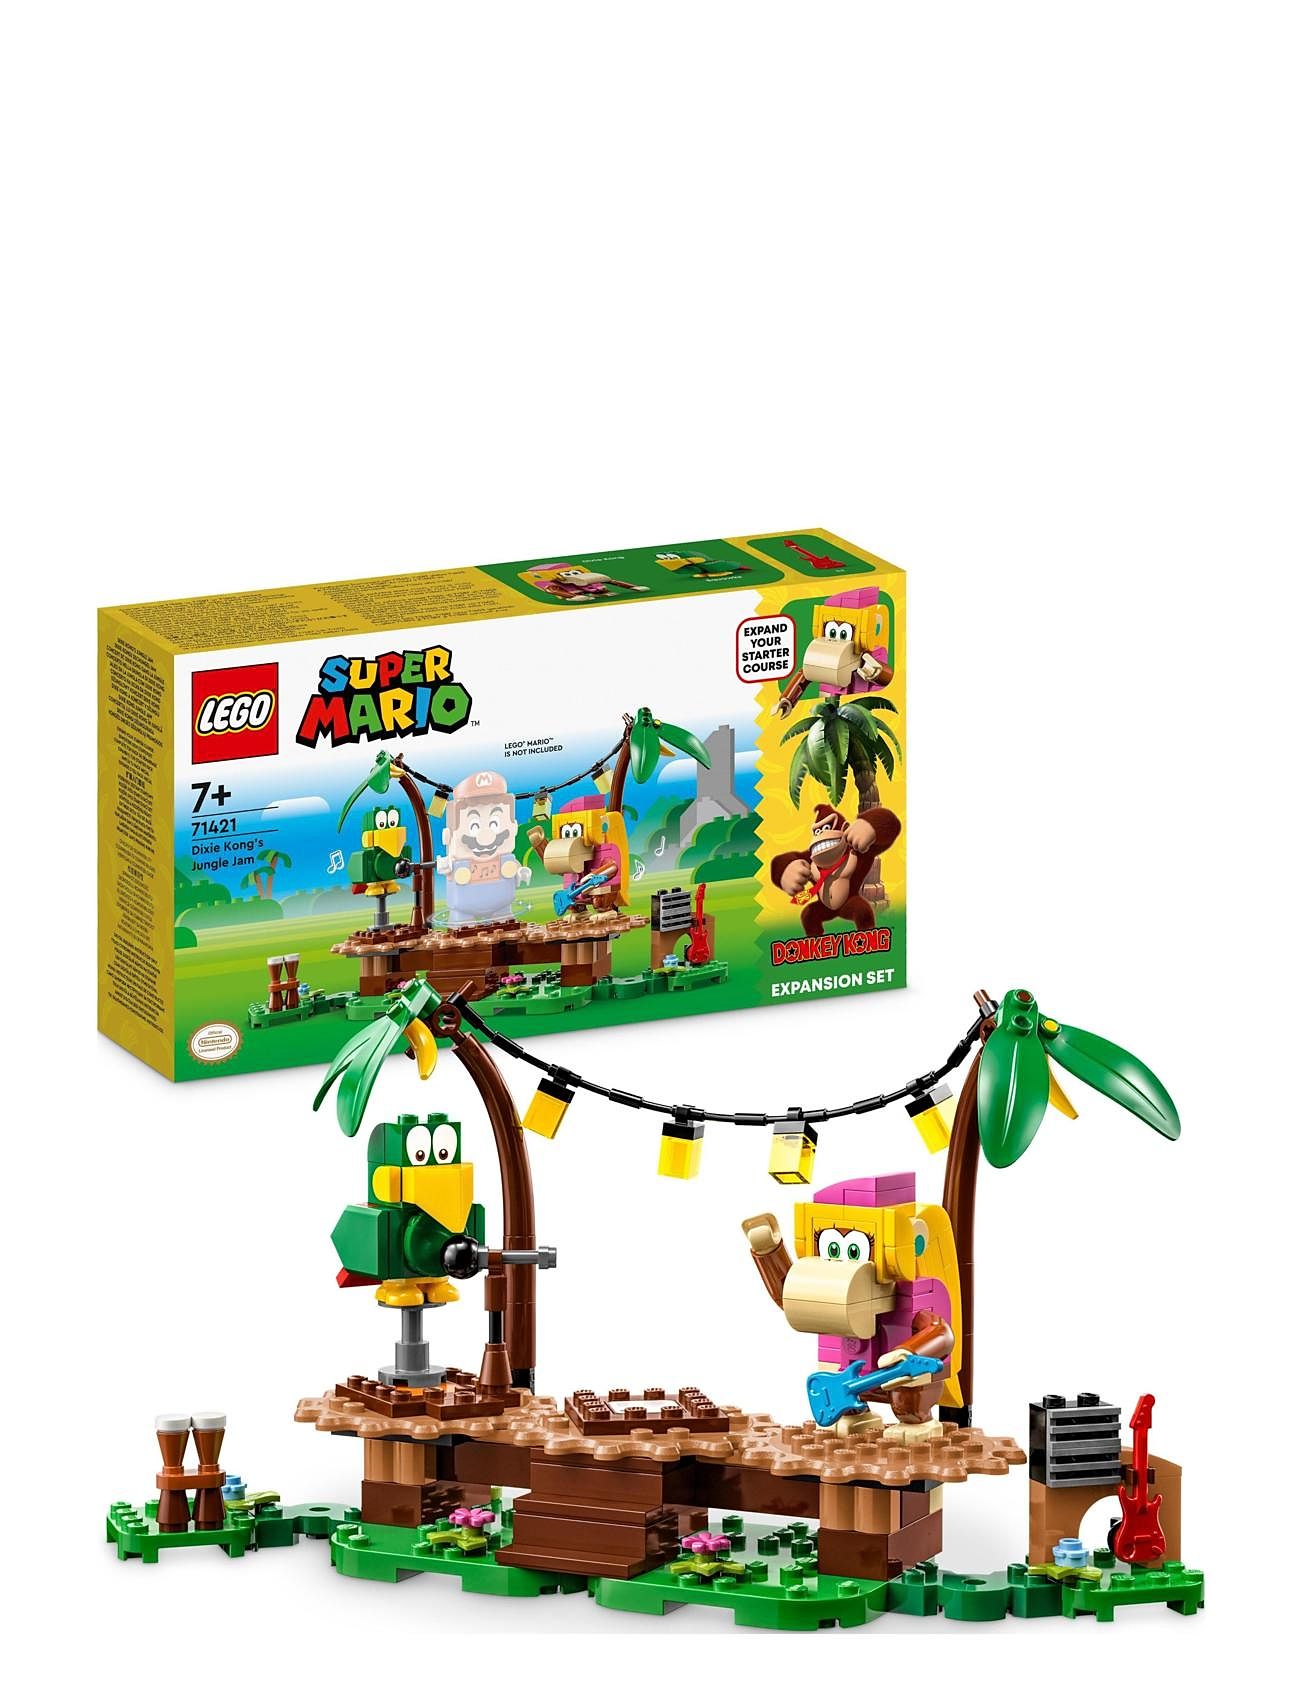 Dixie Kong's Jungle Jam Expansion Set Toys Lego Toys Lego super Mario Multi/patterned LEGO